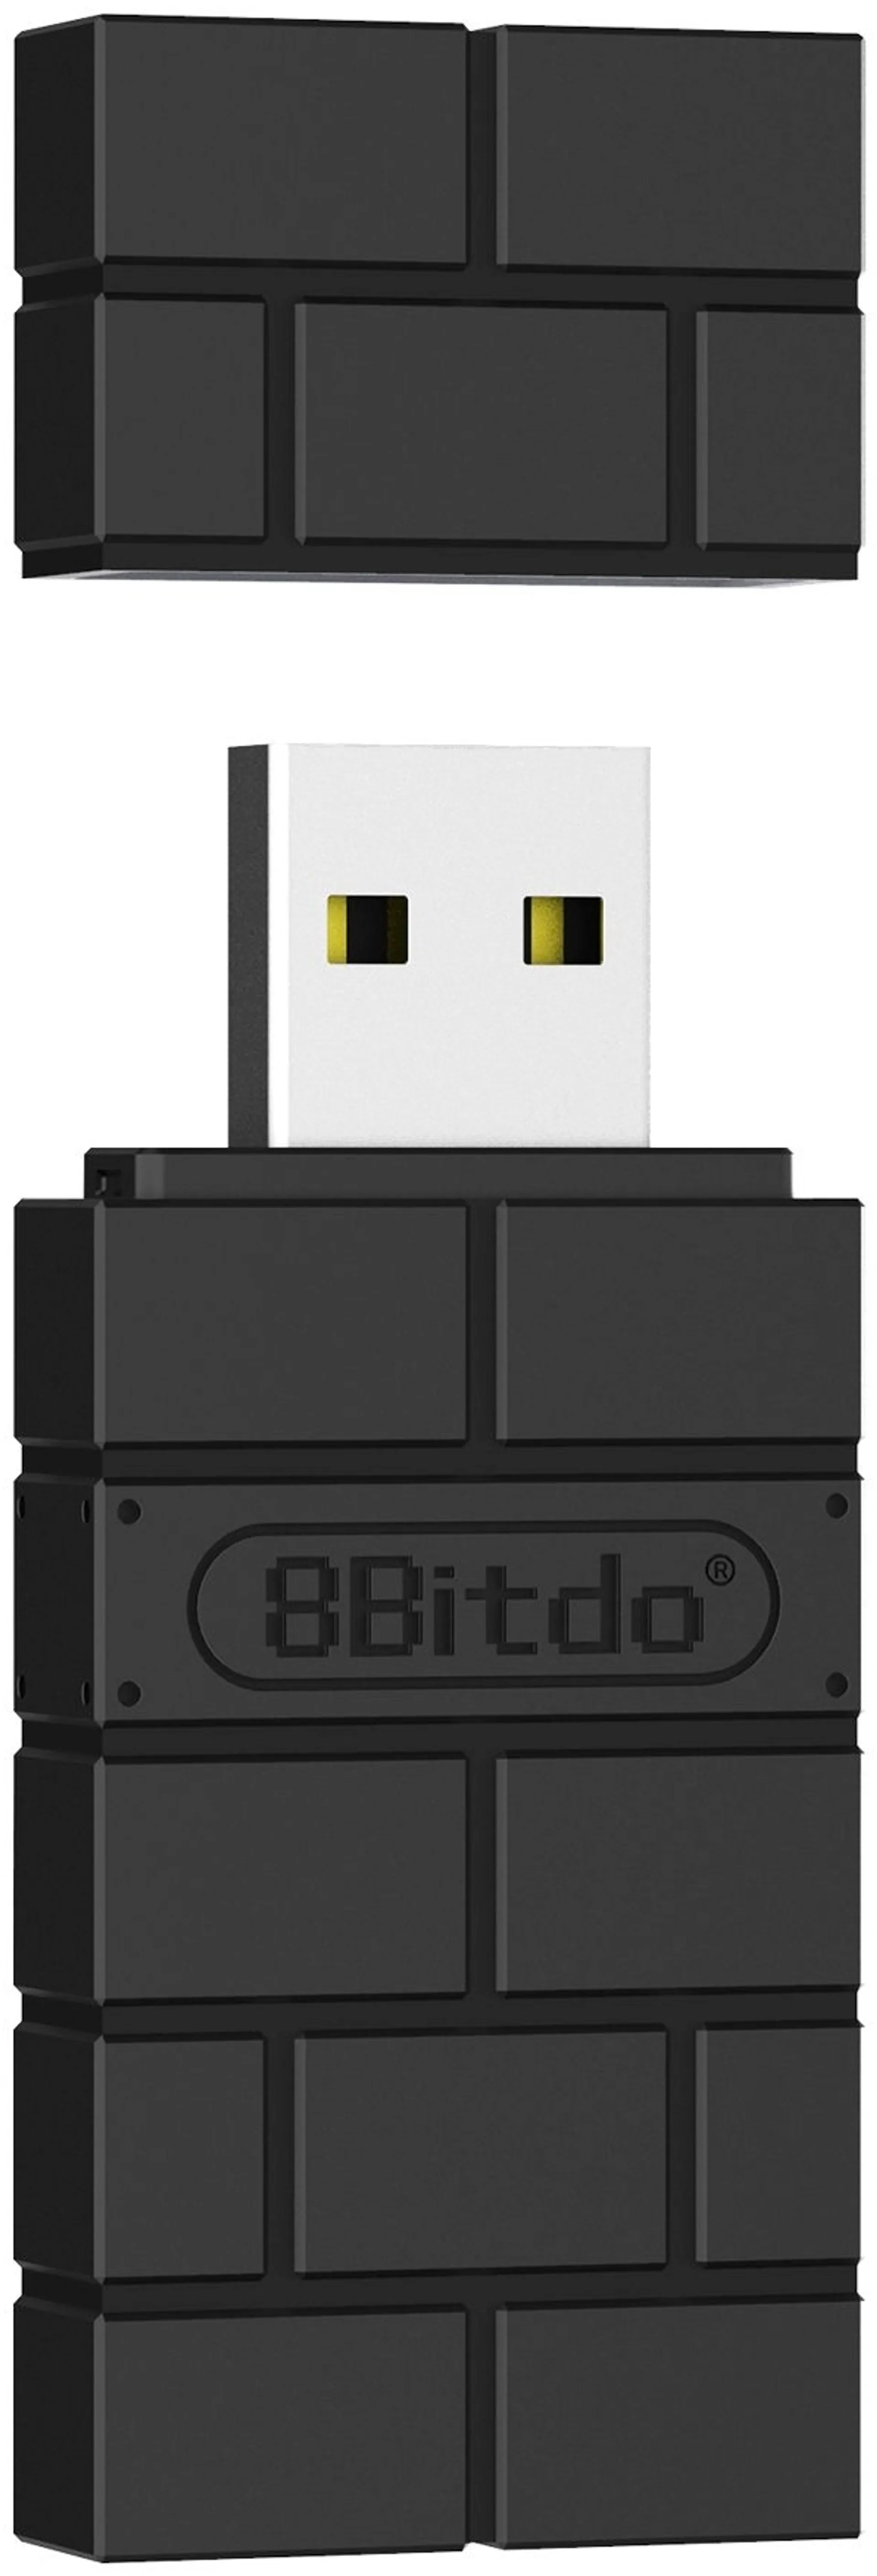 8BitDo adapteri USB langaton